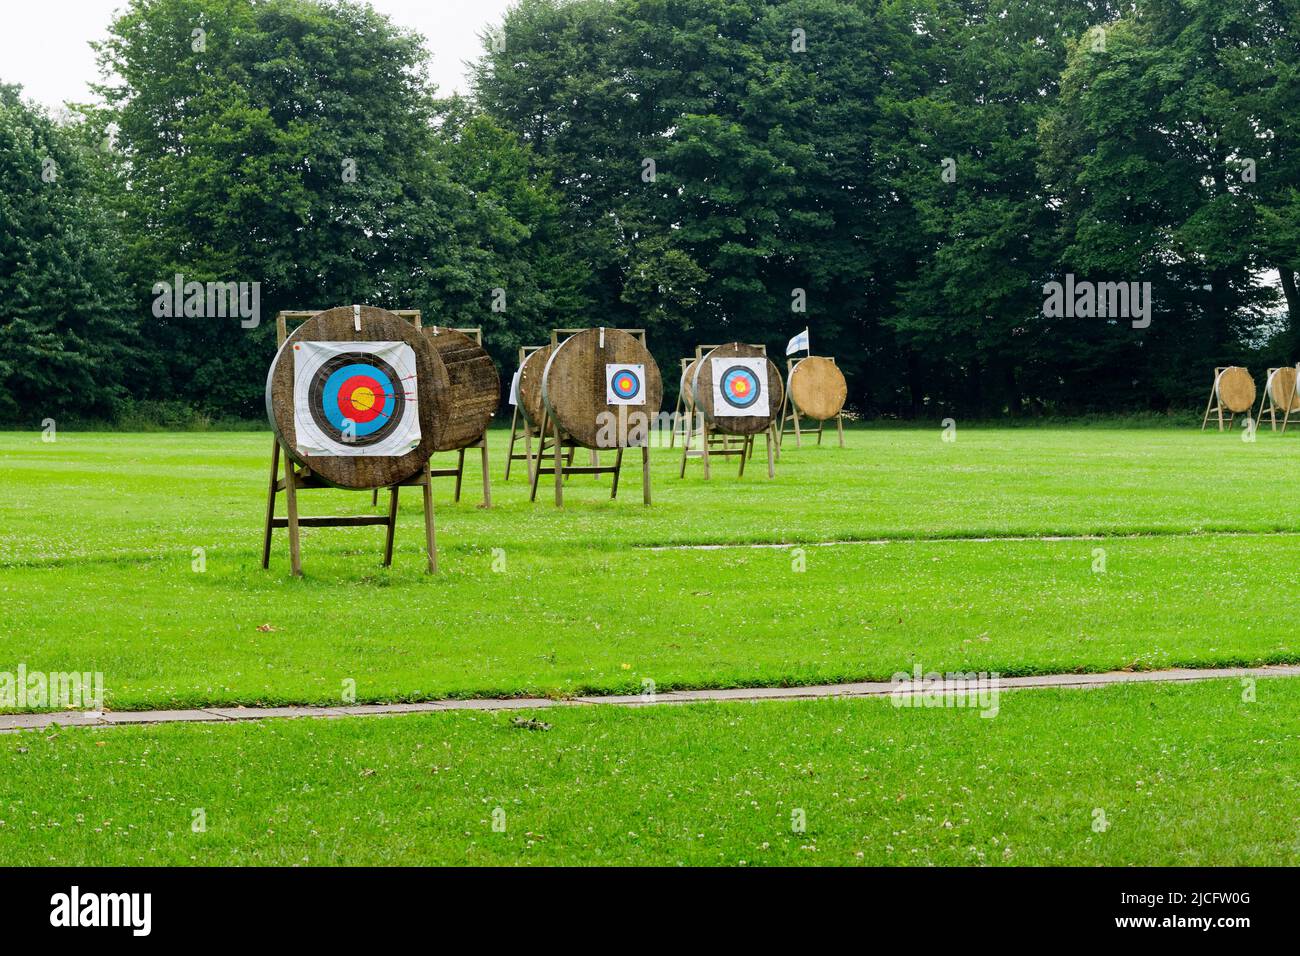 Shooting range for archers, Minden, North Rhine-Westphalia, Germany Stock Photo